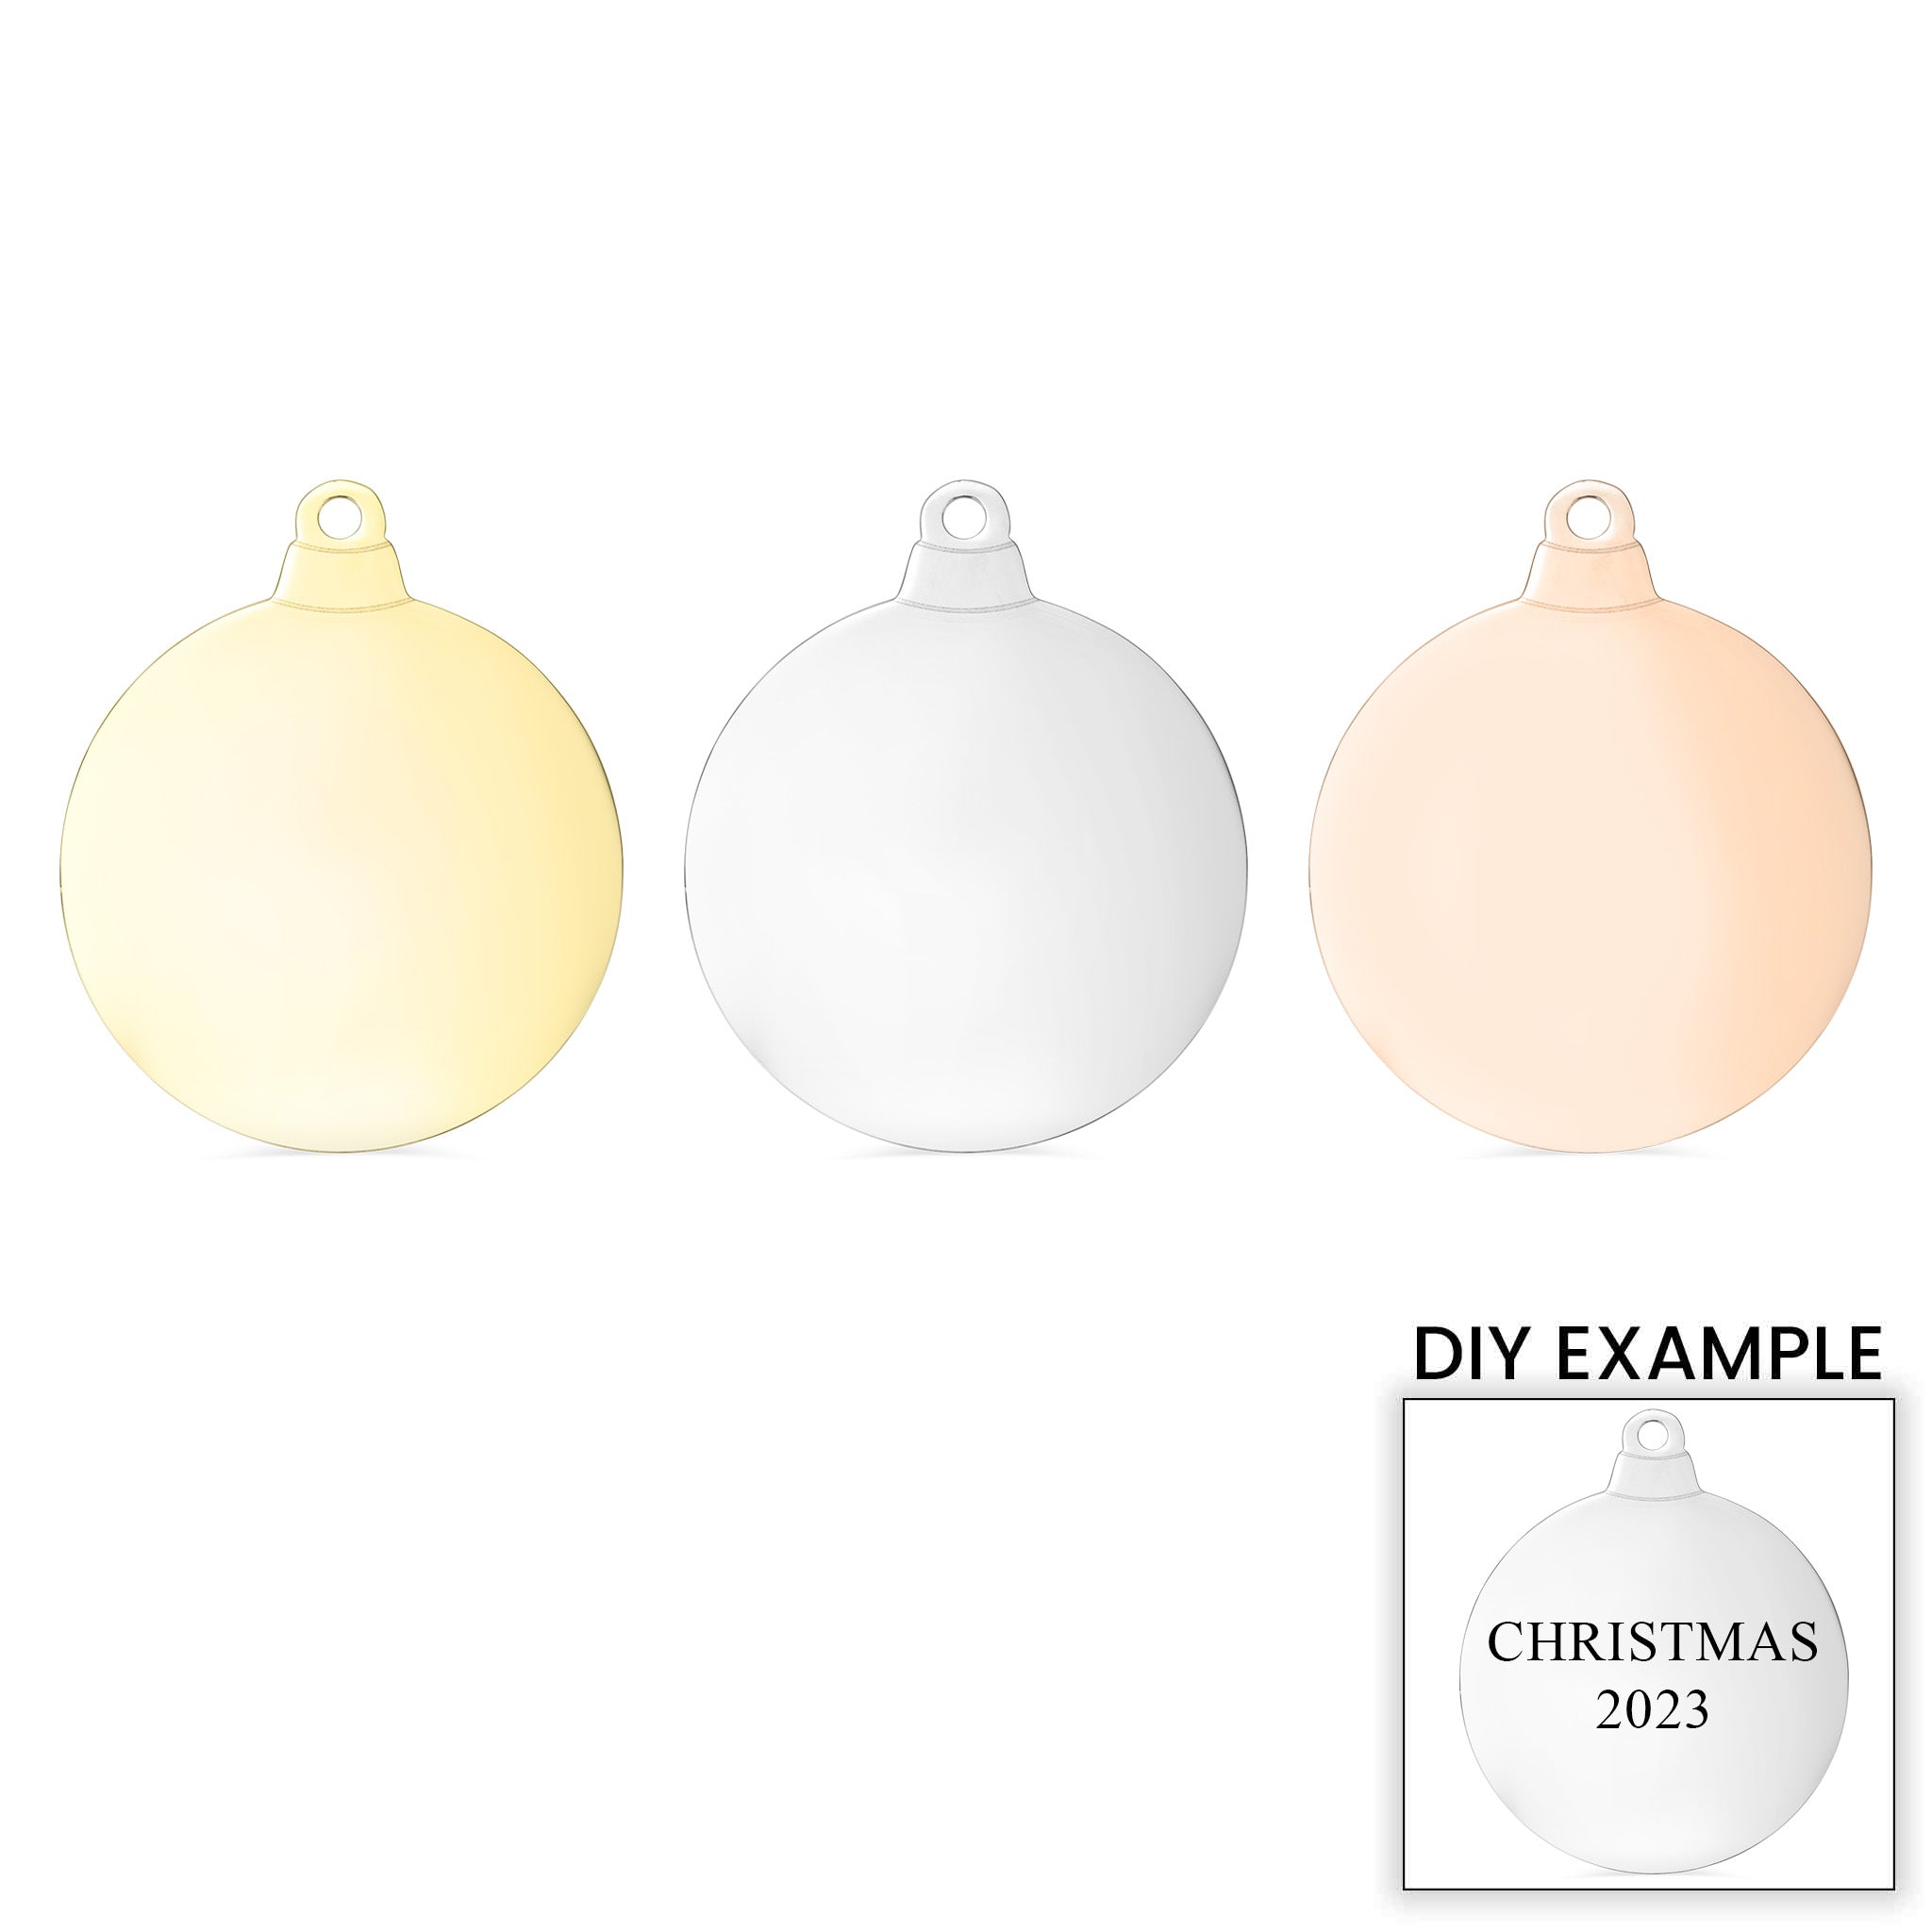 Stainless Steel Blank Christmas Bauble Globe Ornament / SBB0255